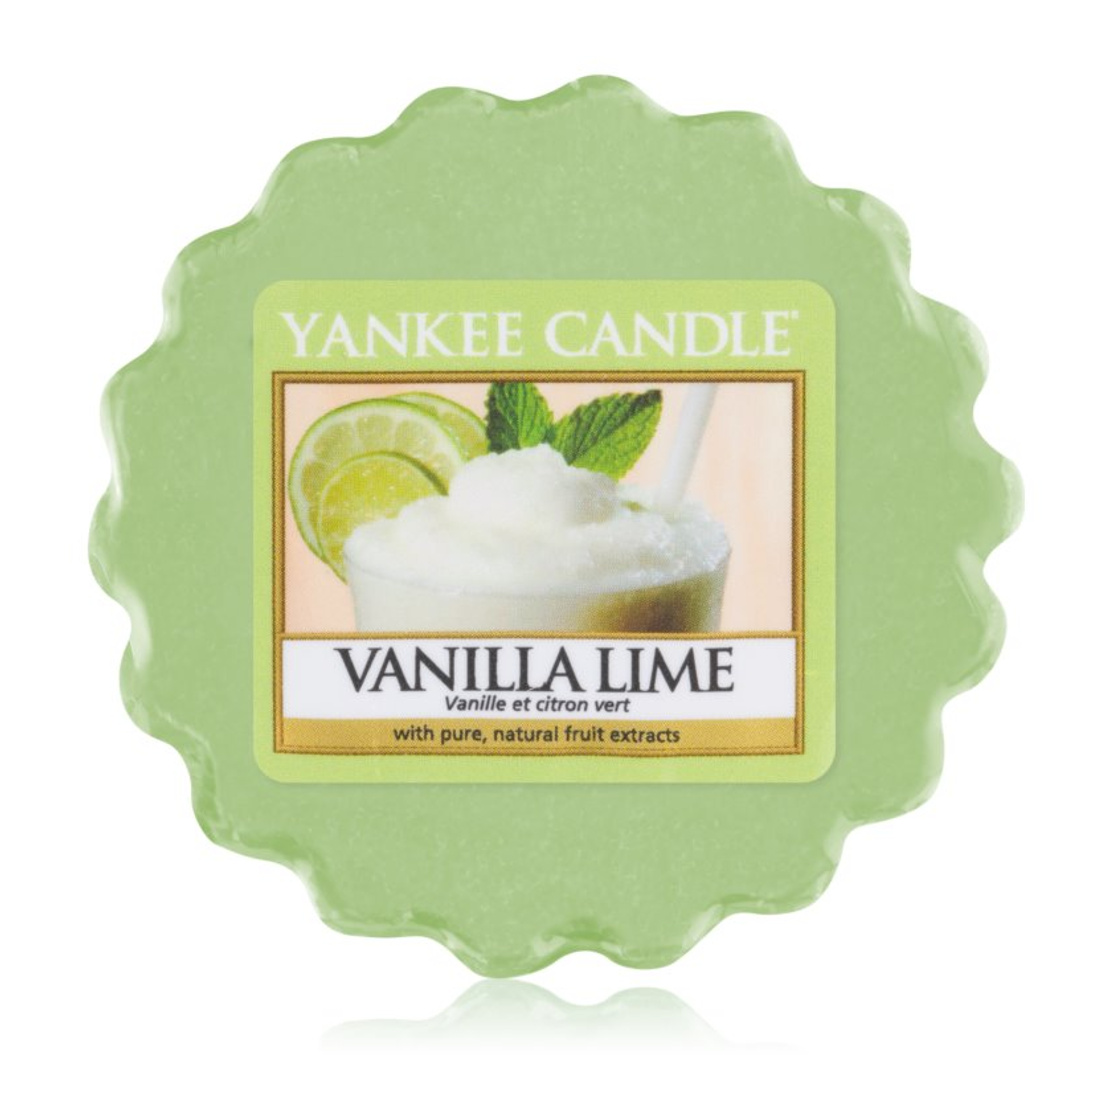 Yankee Candle Vanilla Lime Wax Melt Tart